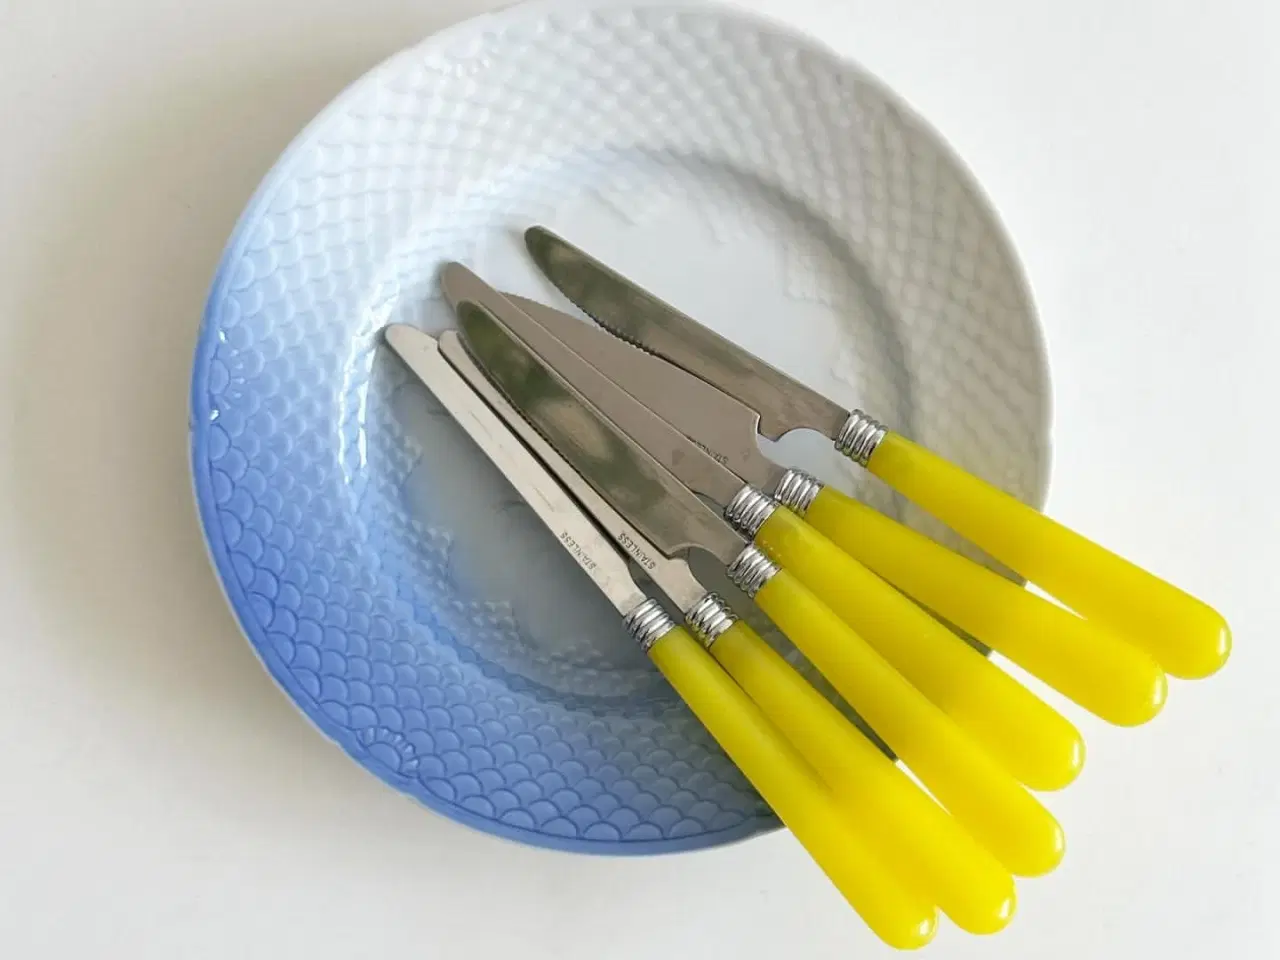 Billede 1 - Retro knive, stål og gul plast, 6 stk samlet